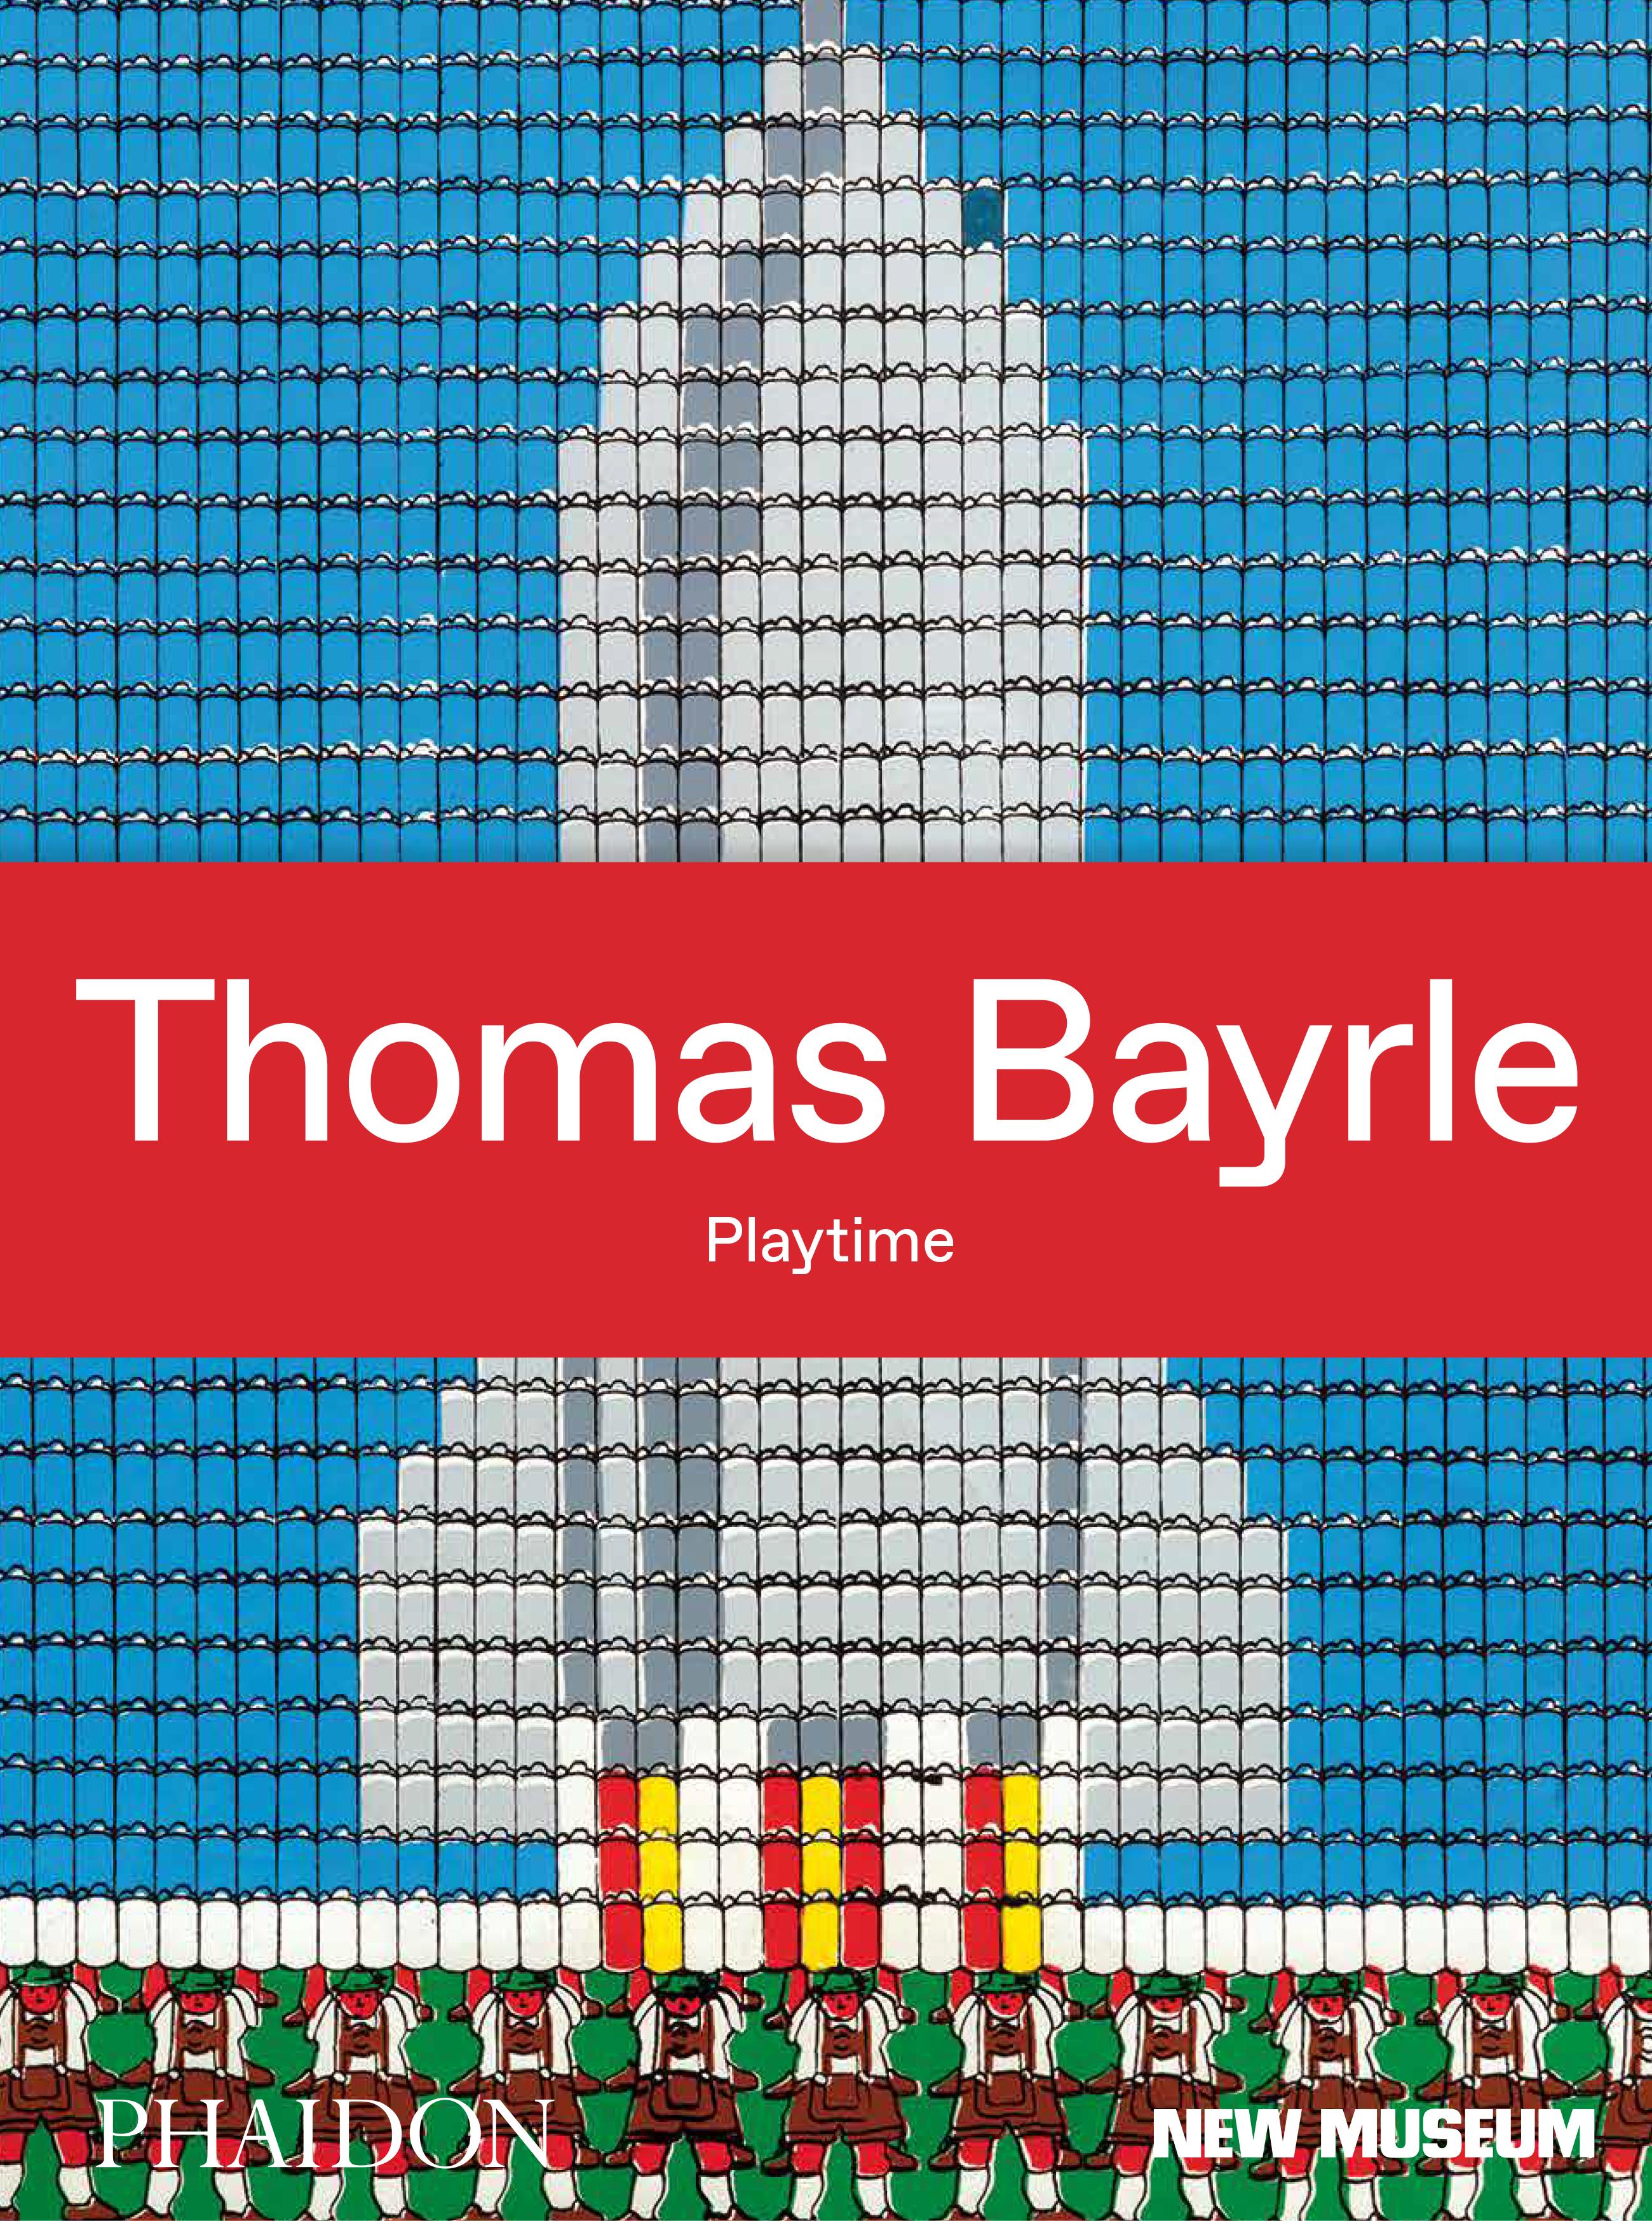 Thomas Bayrle, Playtime For Sale 2